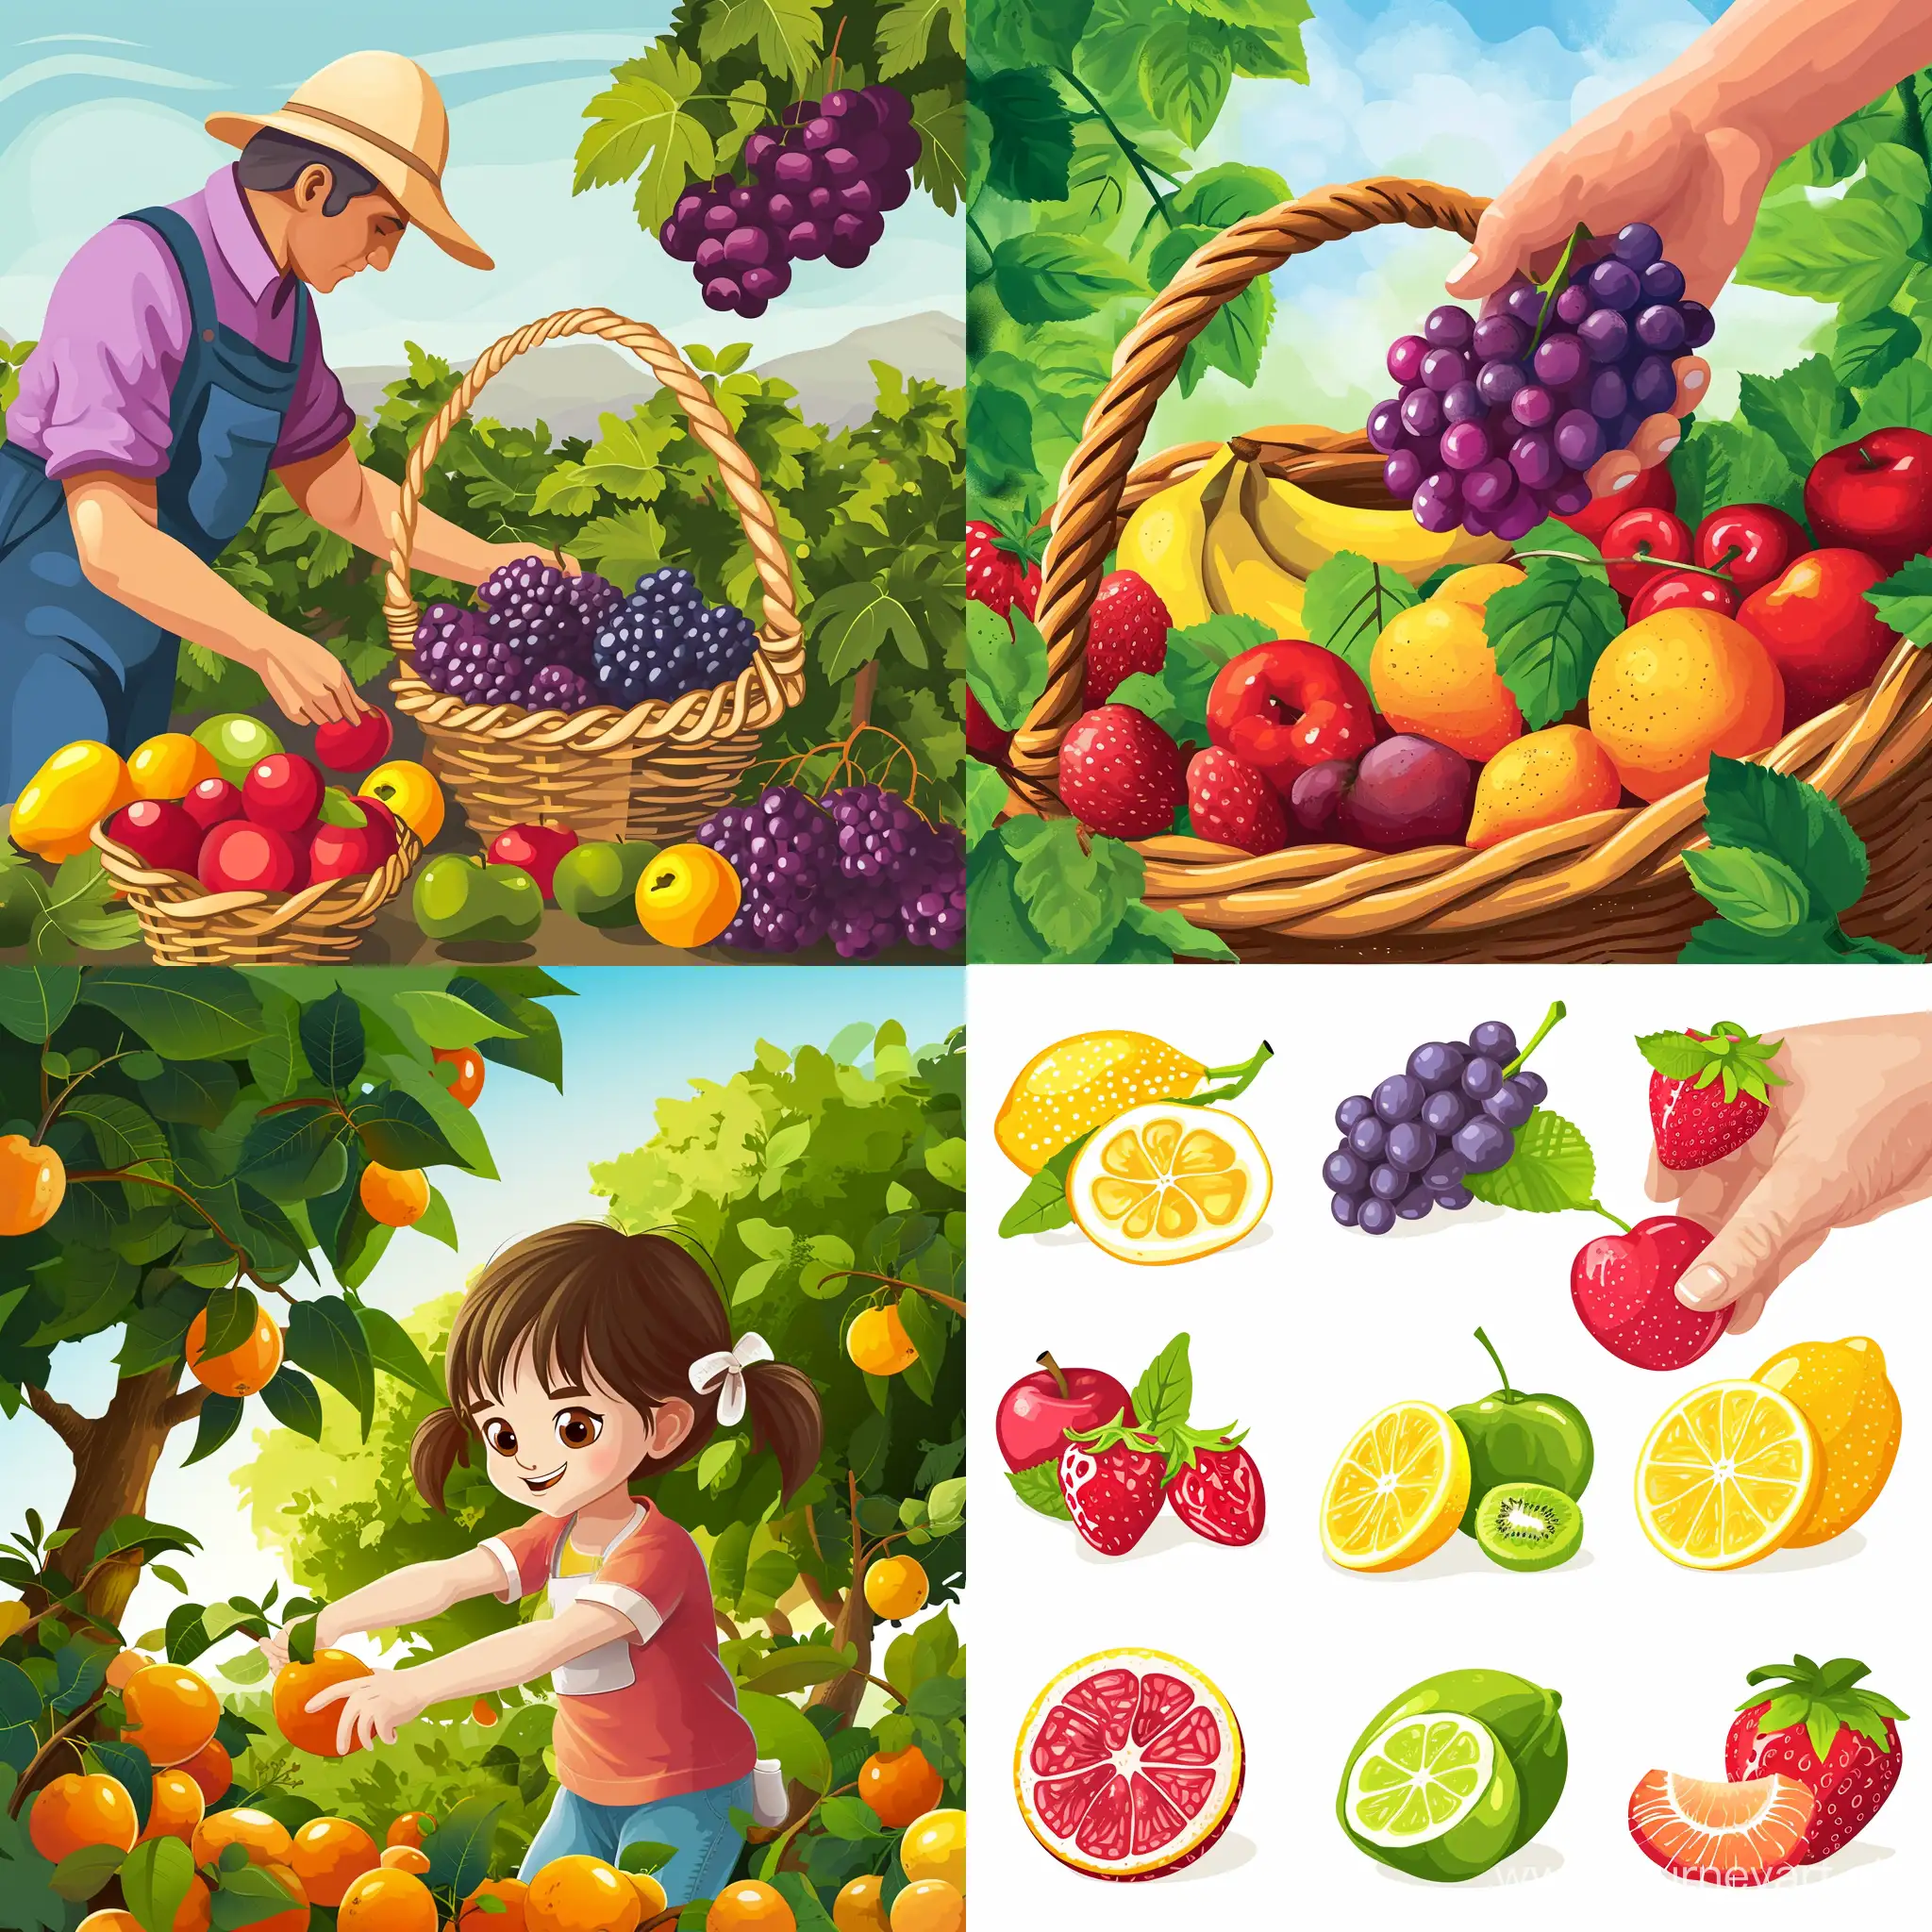 Joyful-Harvest-Vibrant-Animated-Scenes-of-Fruit-Picking